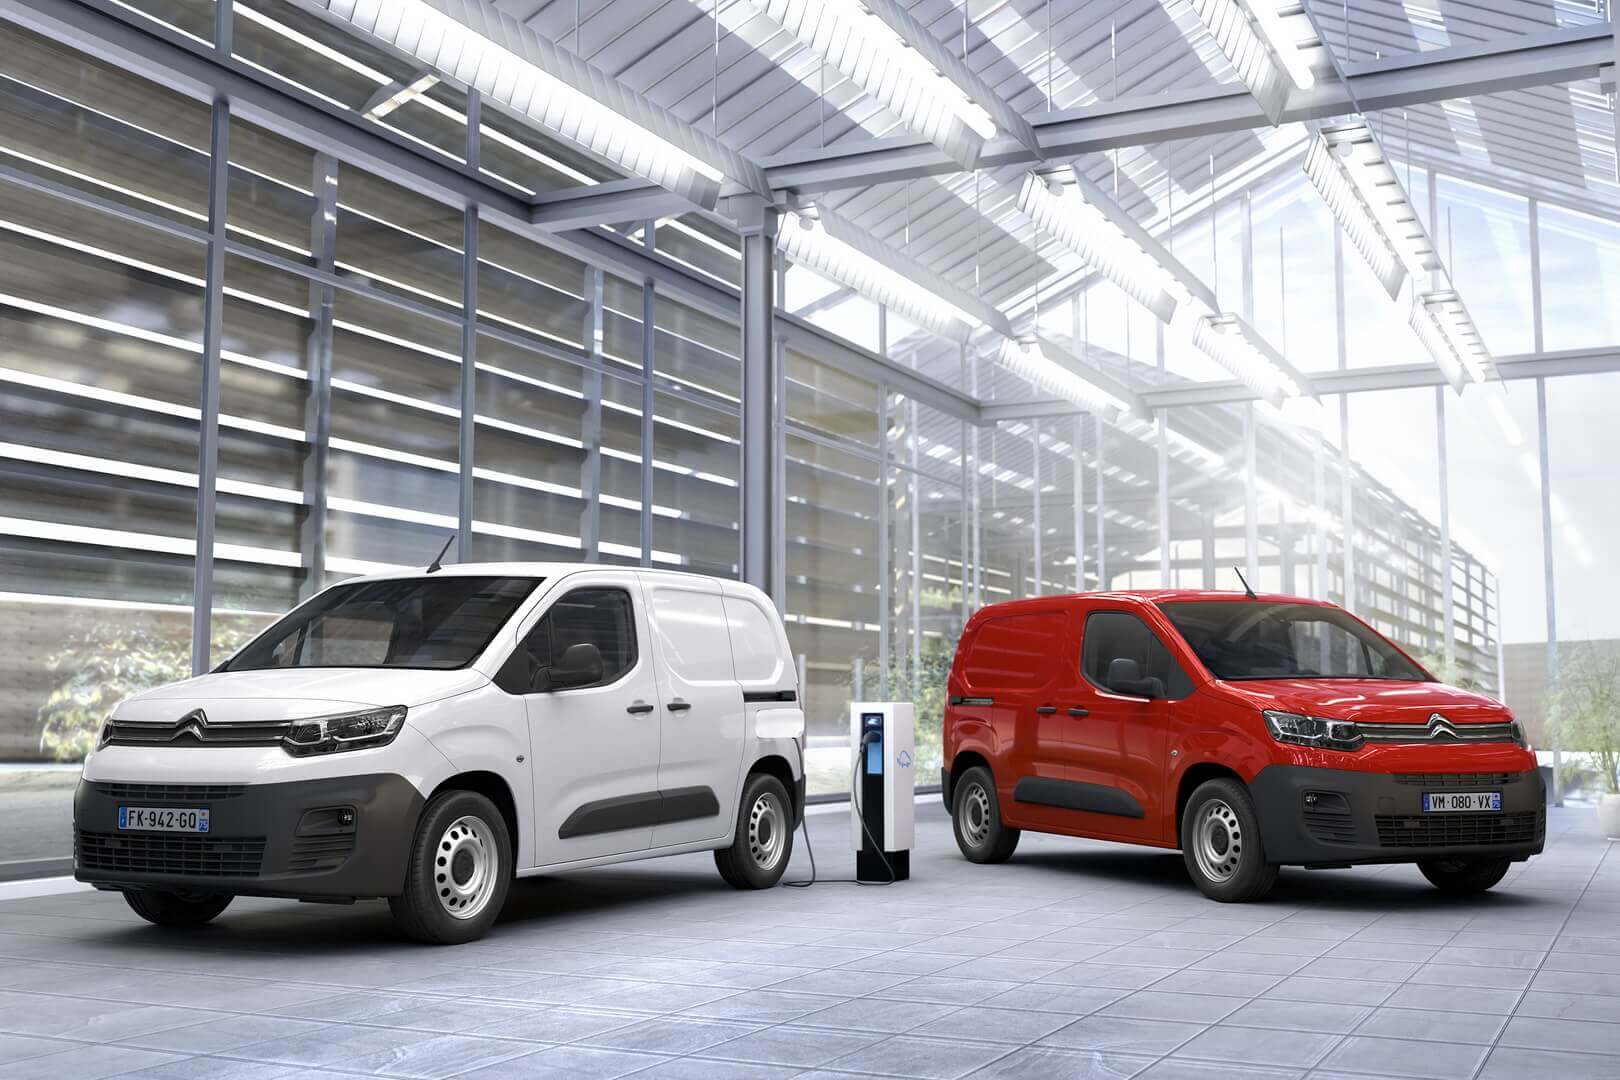 Citroën представляет электрический фургон ë-Berlingo с пробегом до 275 км